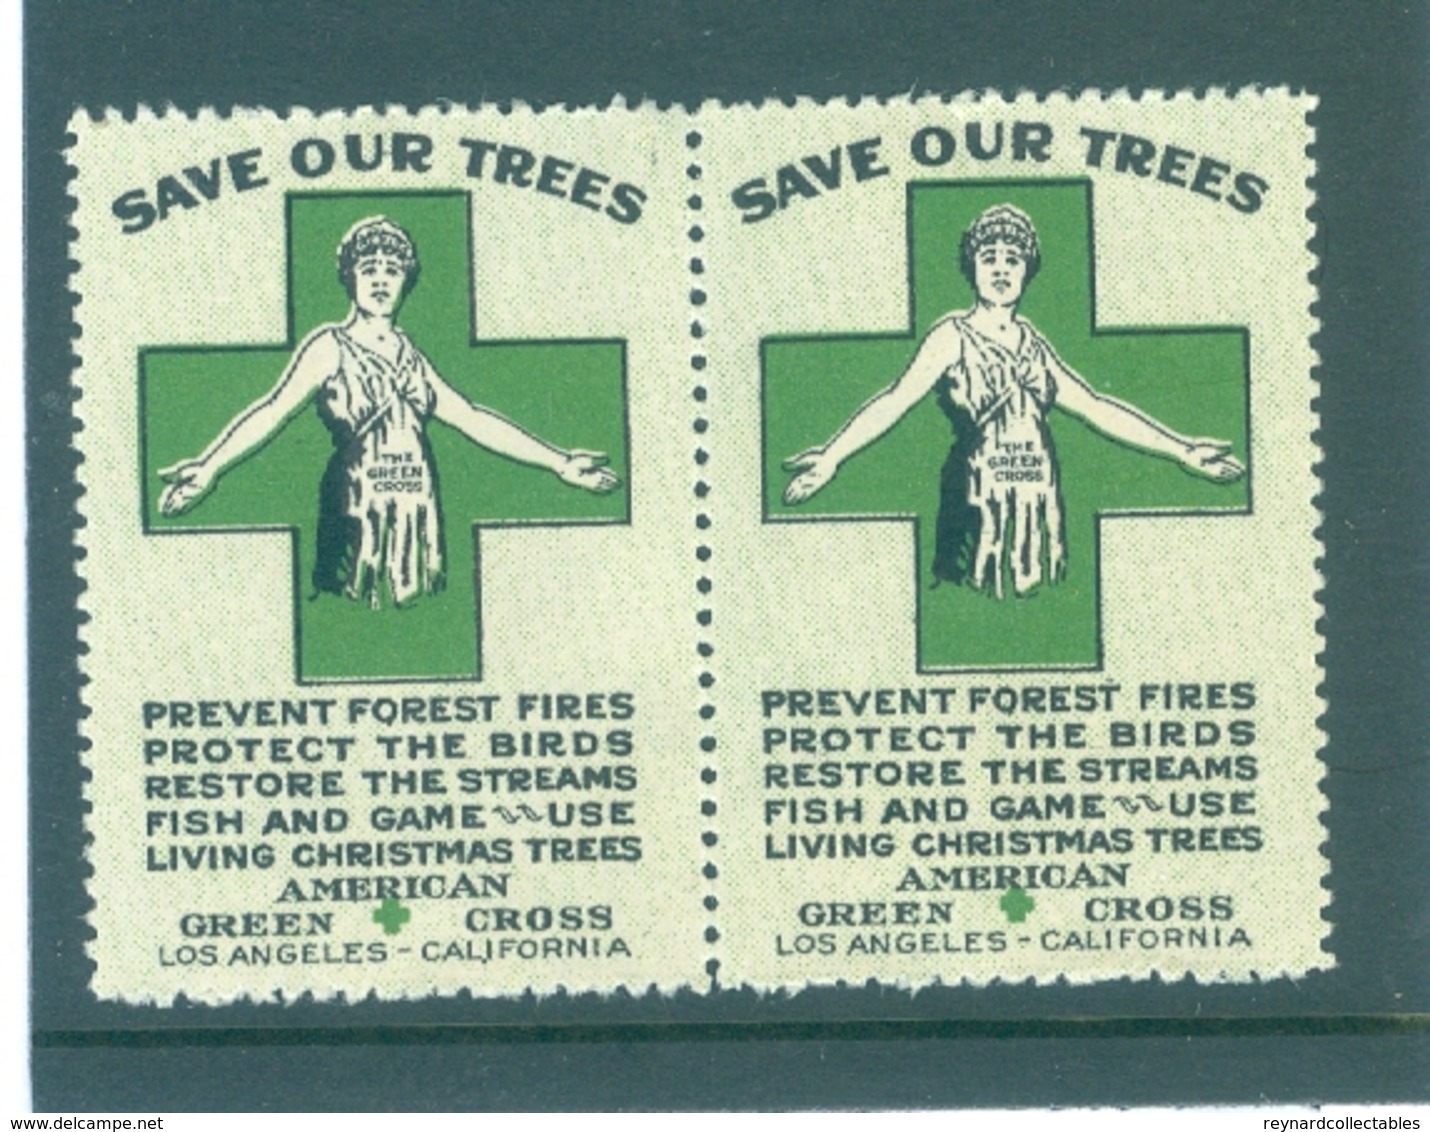 Vintage US Green Cross "Save Our Trees" Poster Stamp Pair, Los Angeles, California - Cinderellas